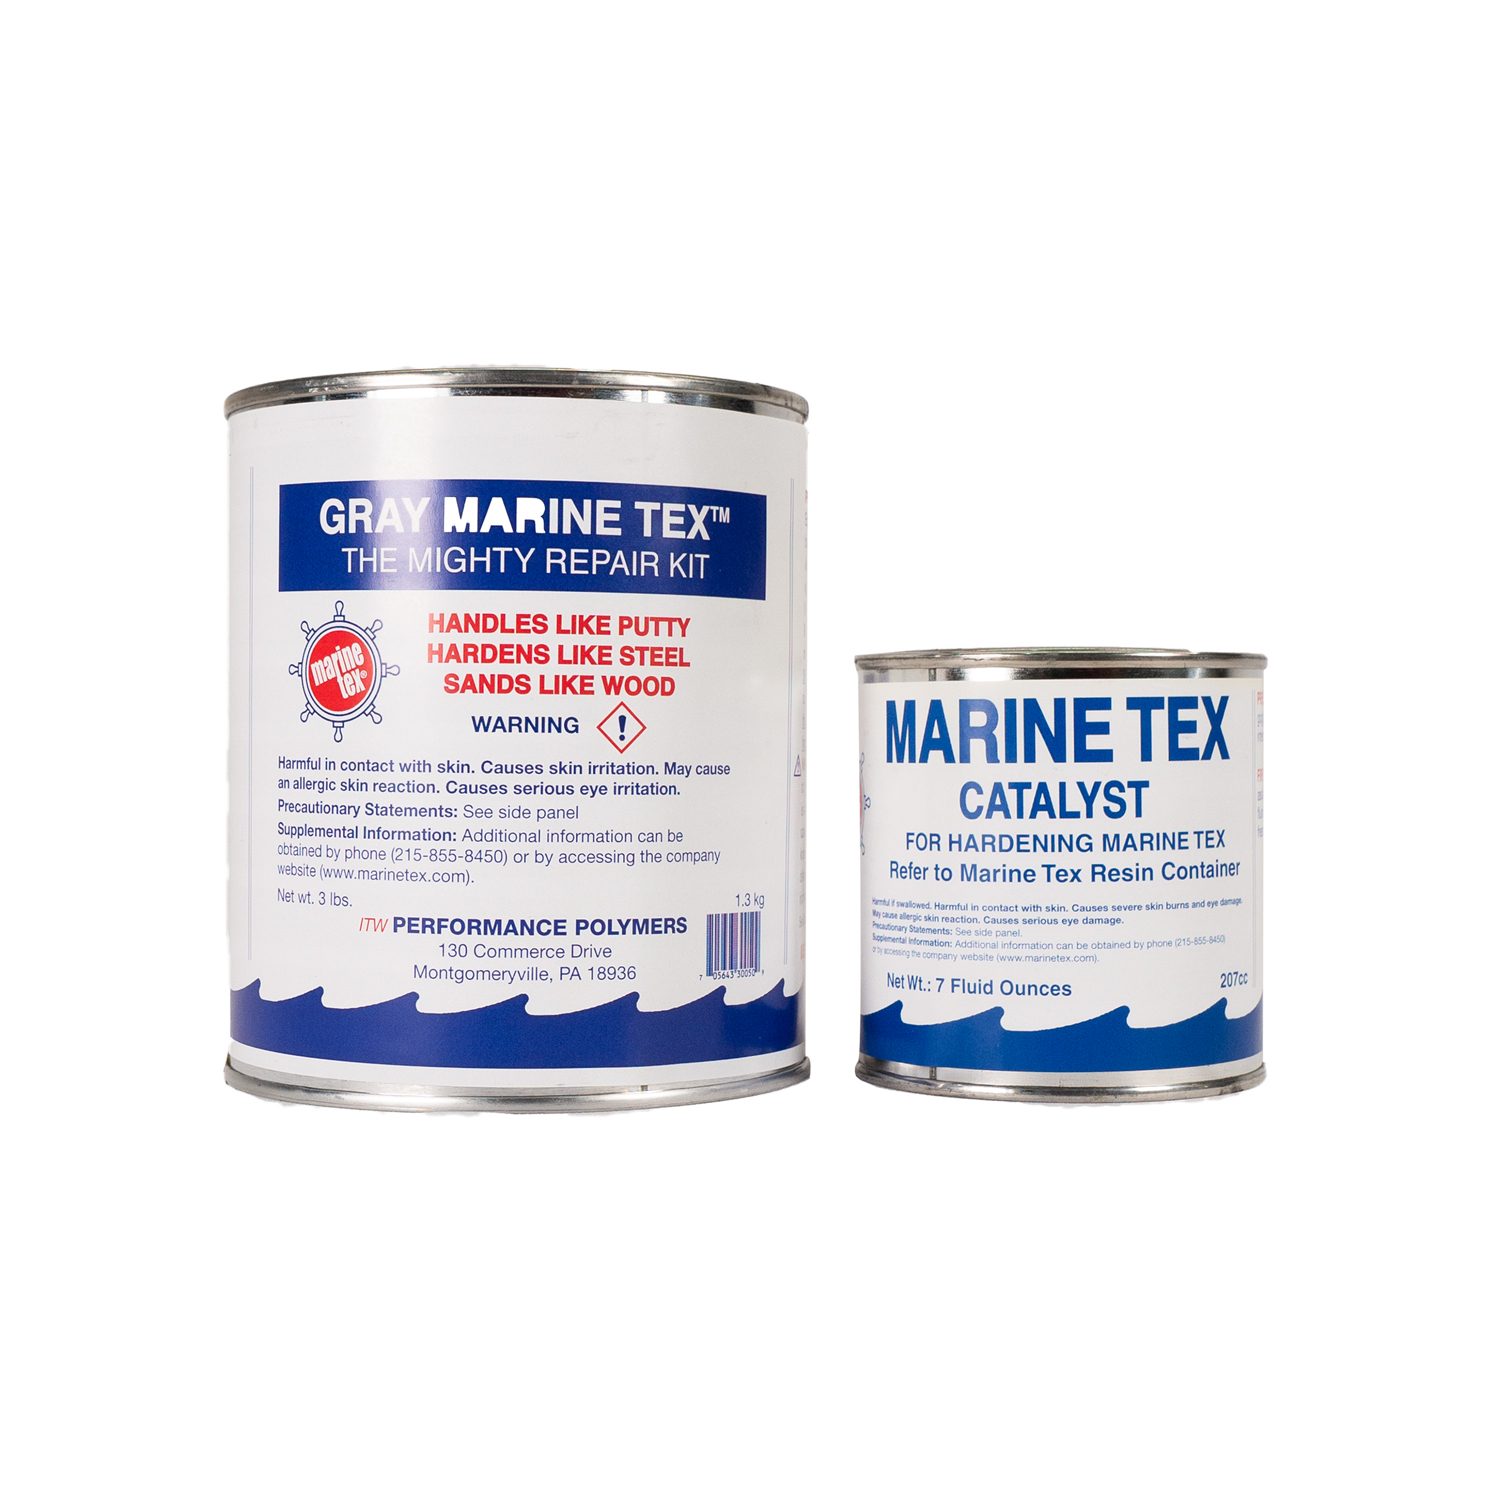 EZ-Tex Marine Epoxy Repair Compound